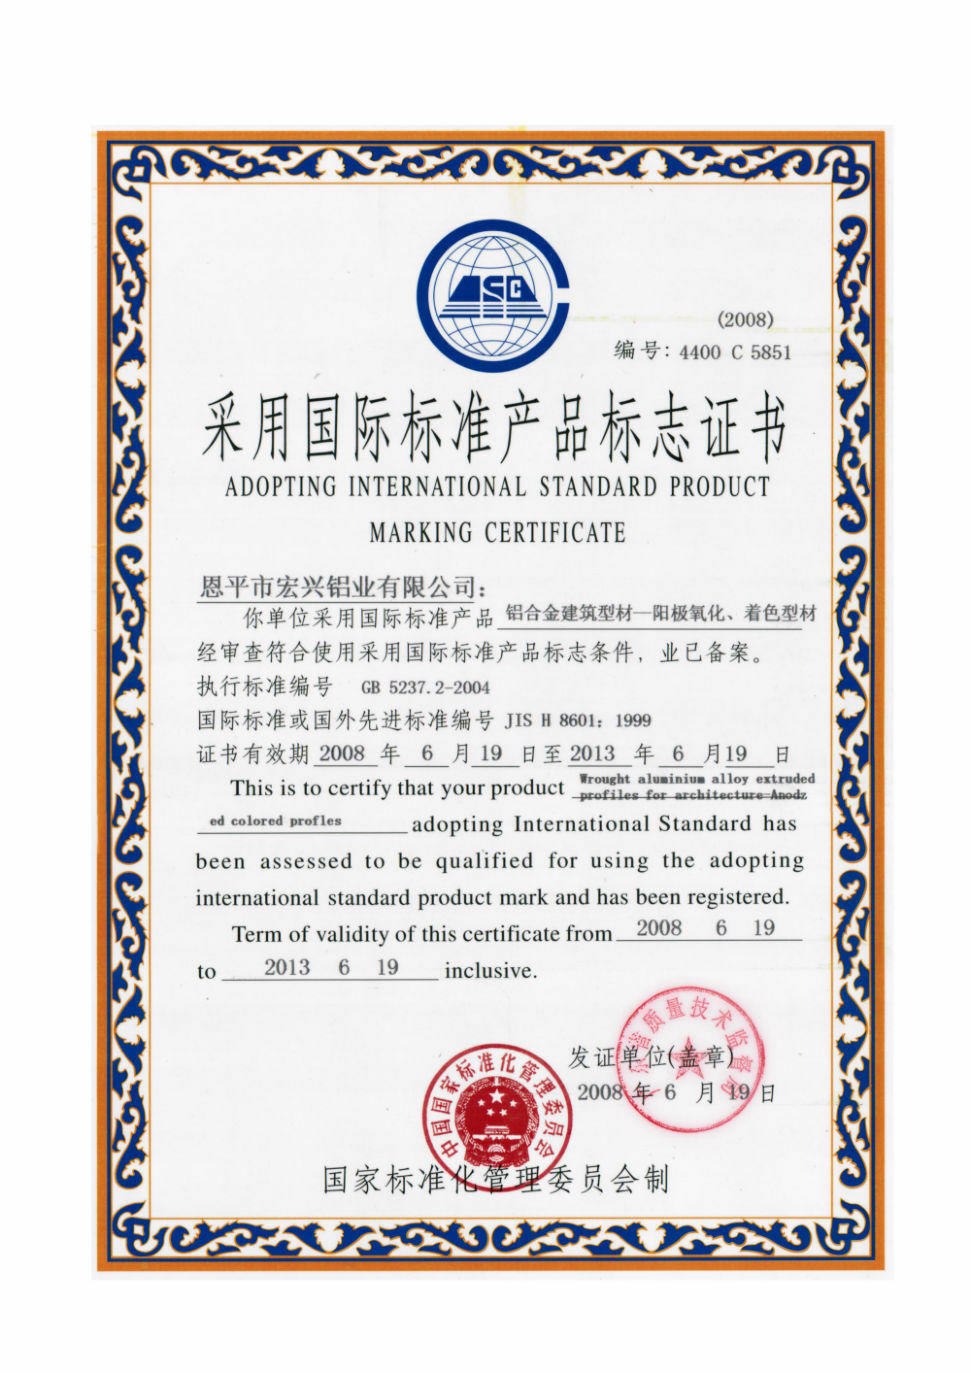 Adopting international standard product certificate oxidation